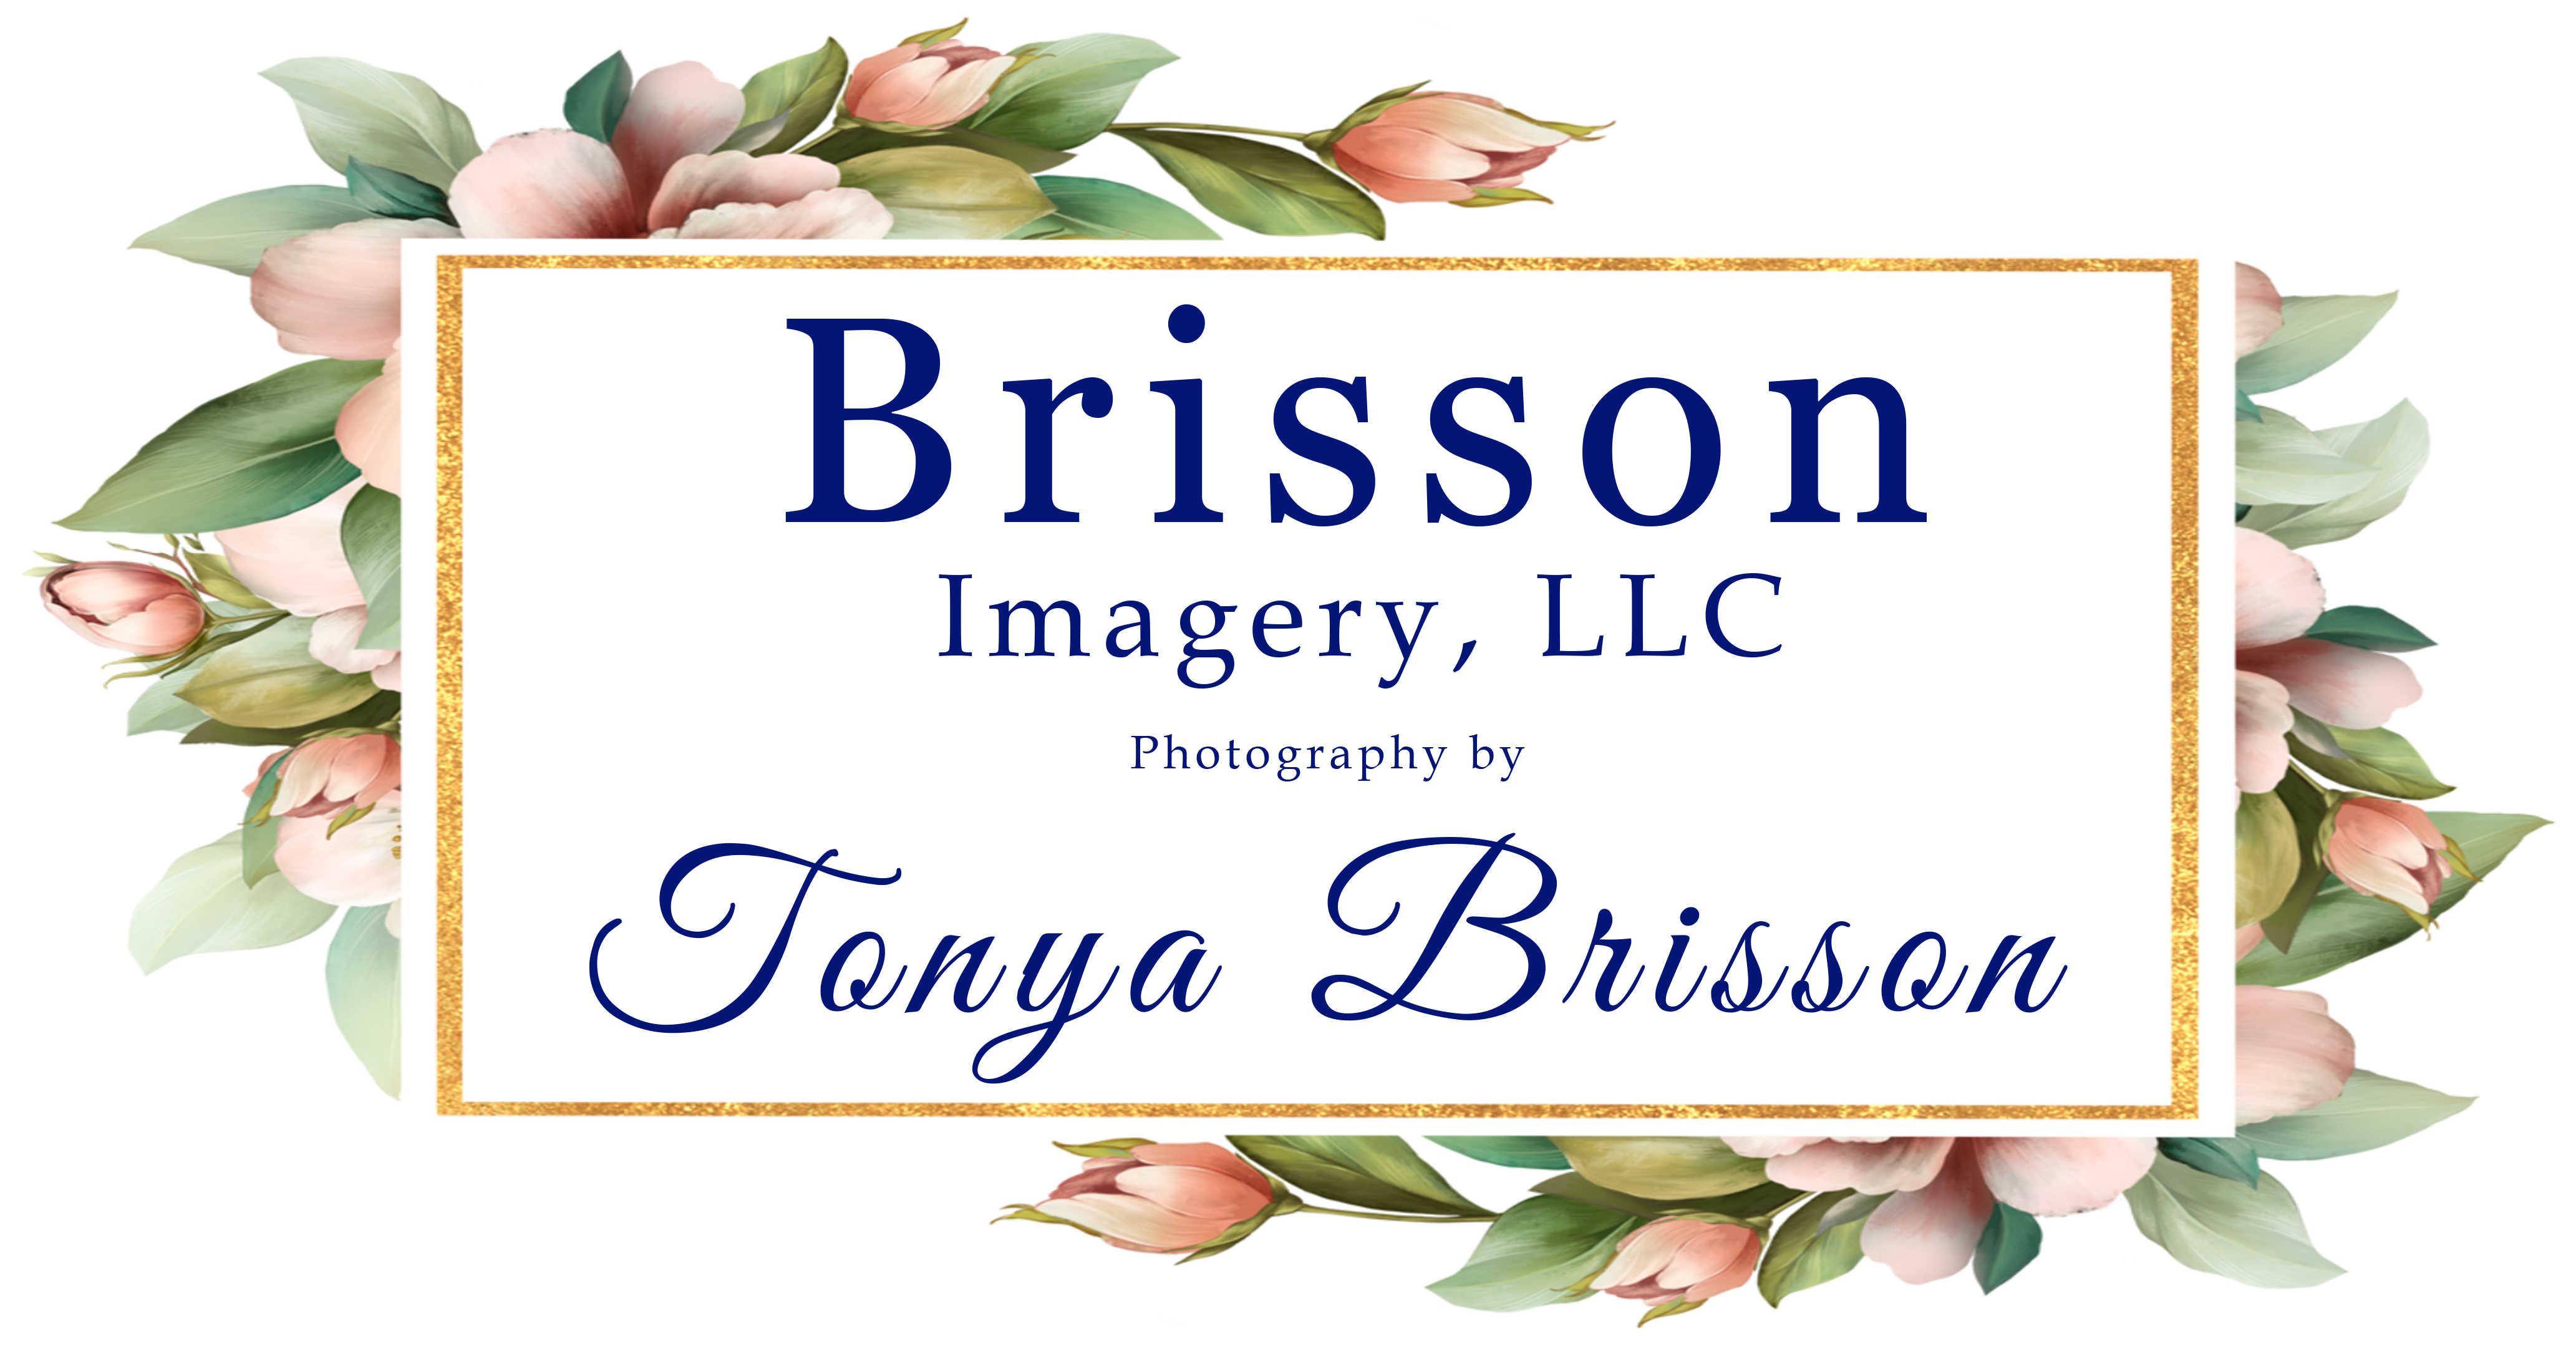 Brisson Imagery, LLC